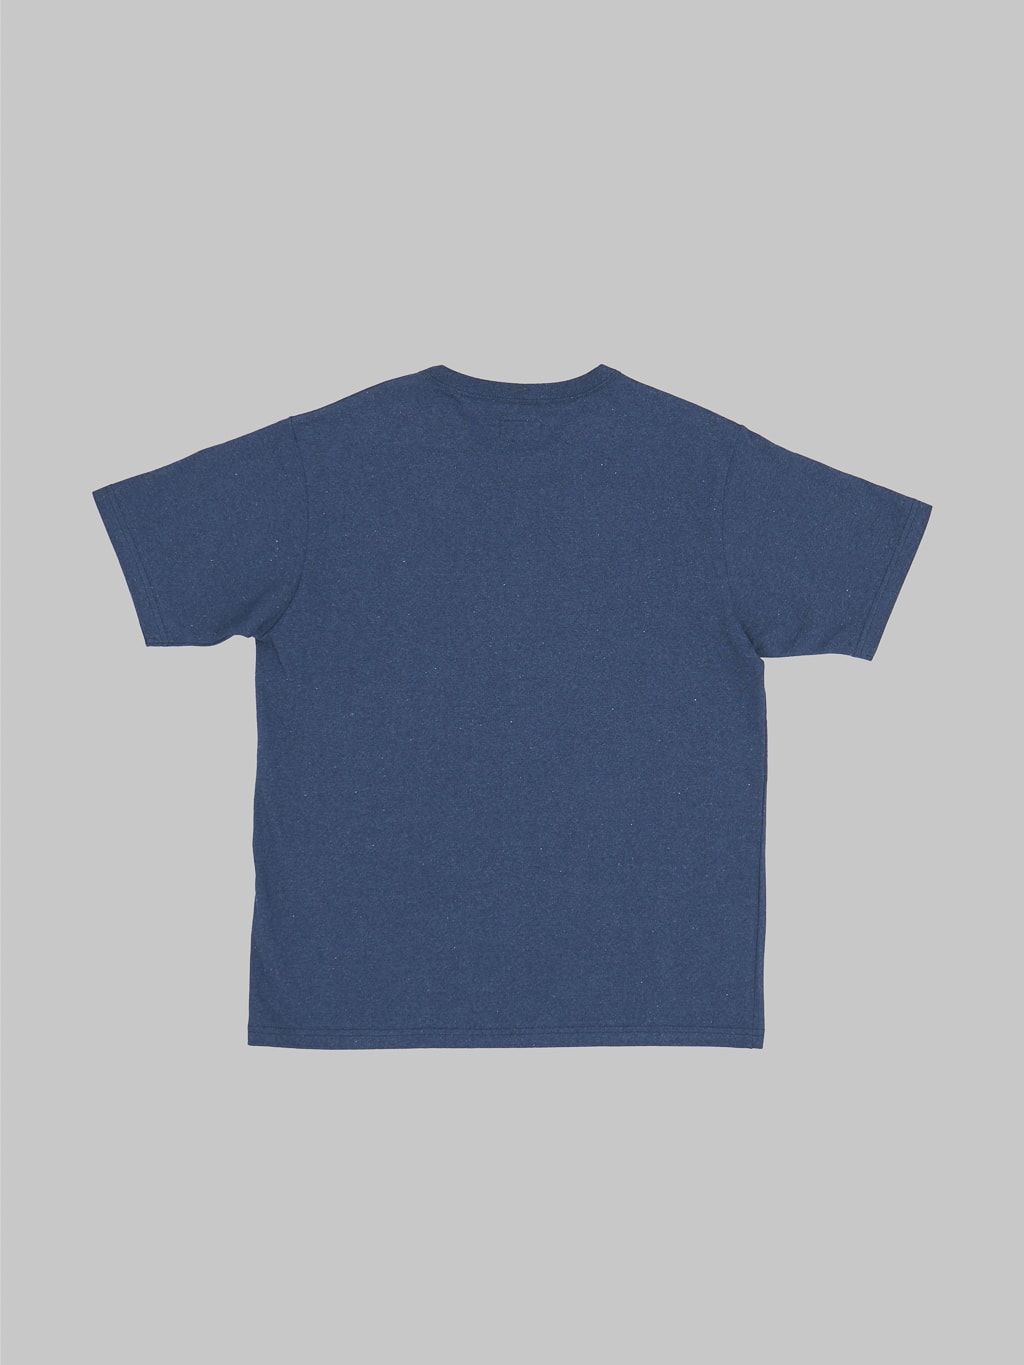 Japan Blue Recycled Denim Tshirt Dark Indigo back